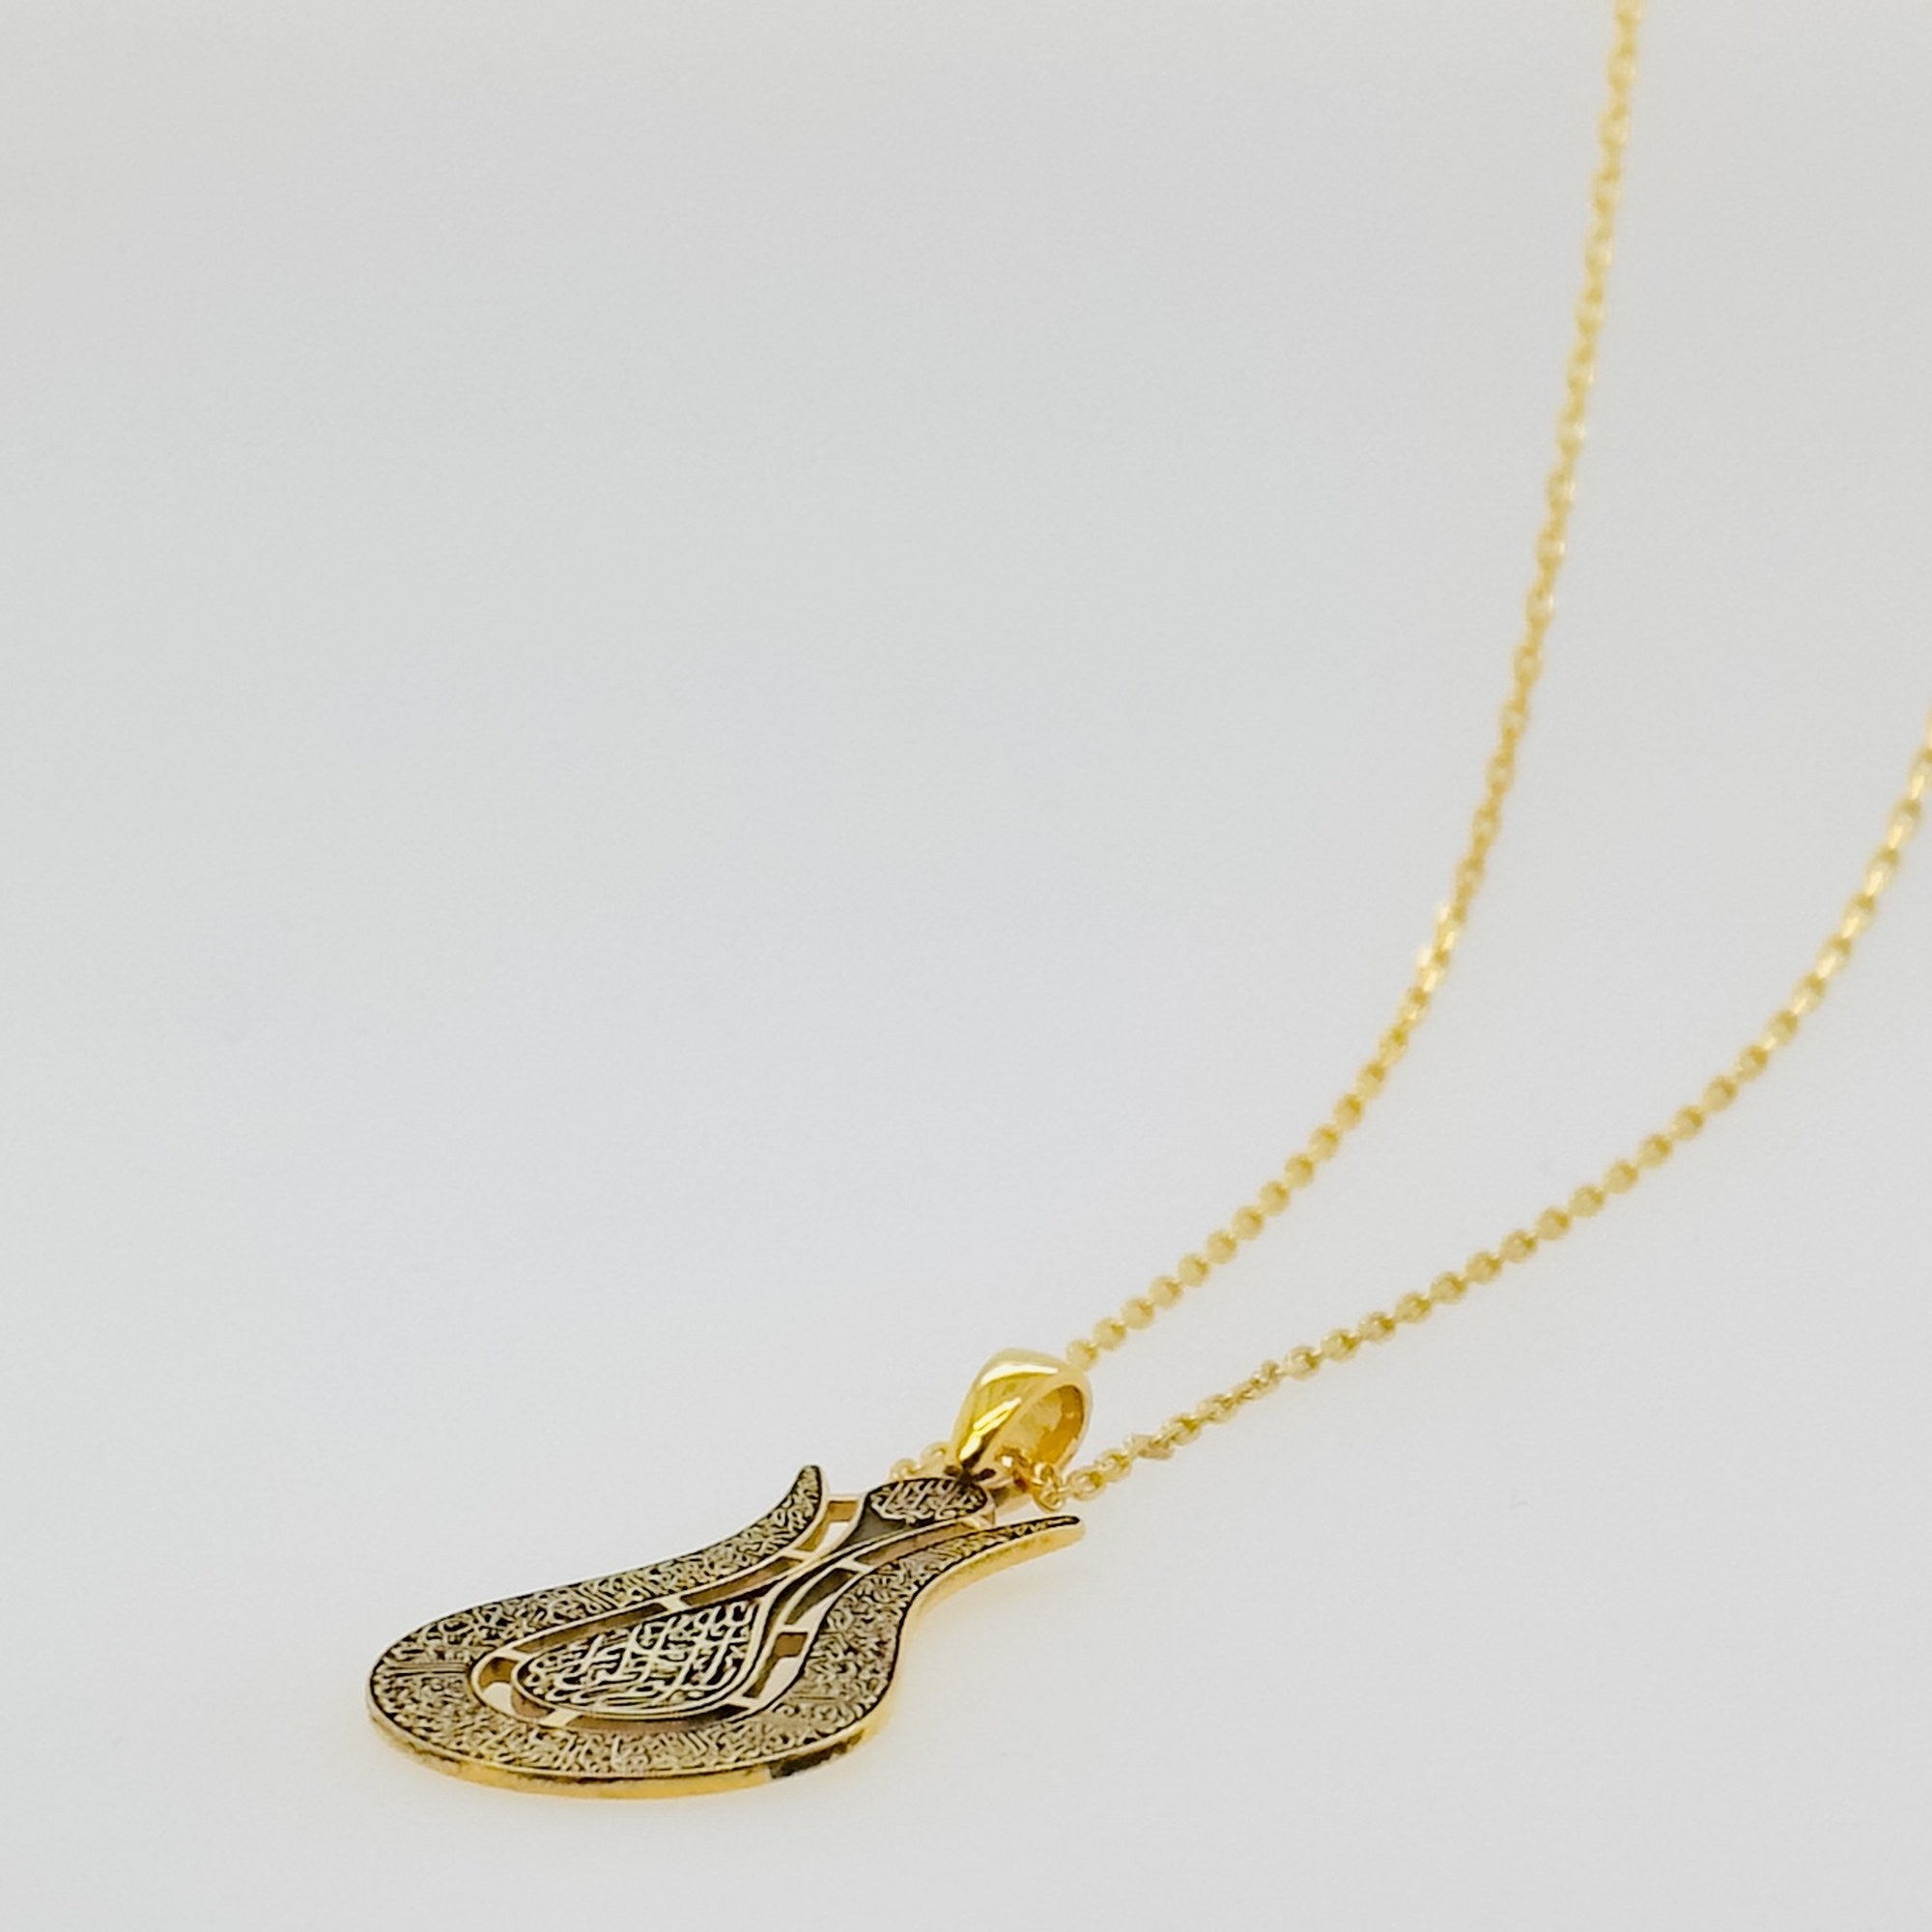 islamic-jewelry-ayatul-kursi-tulip-islamic-necklace-18k-gold-pendant-on-925-silver-discover-best-islamic-jewelry-websites-shukranislamicart